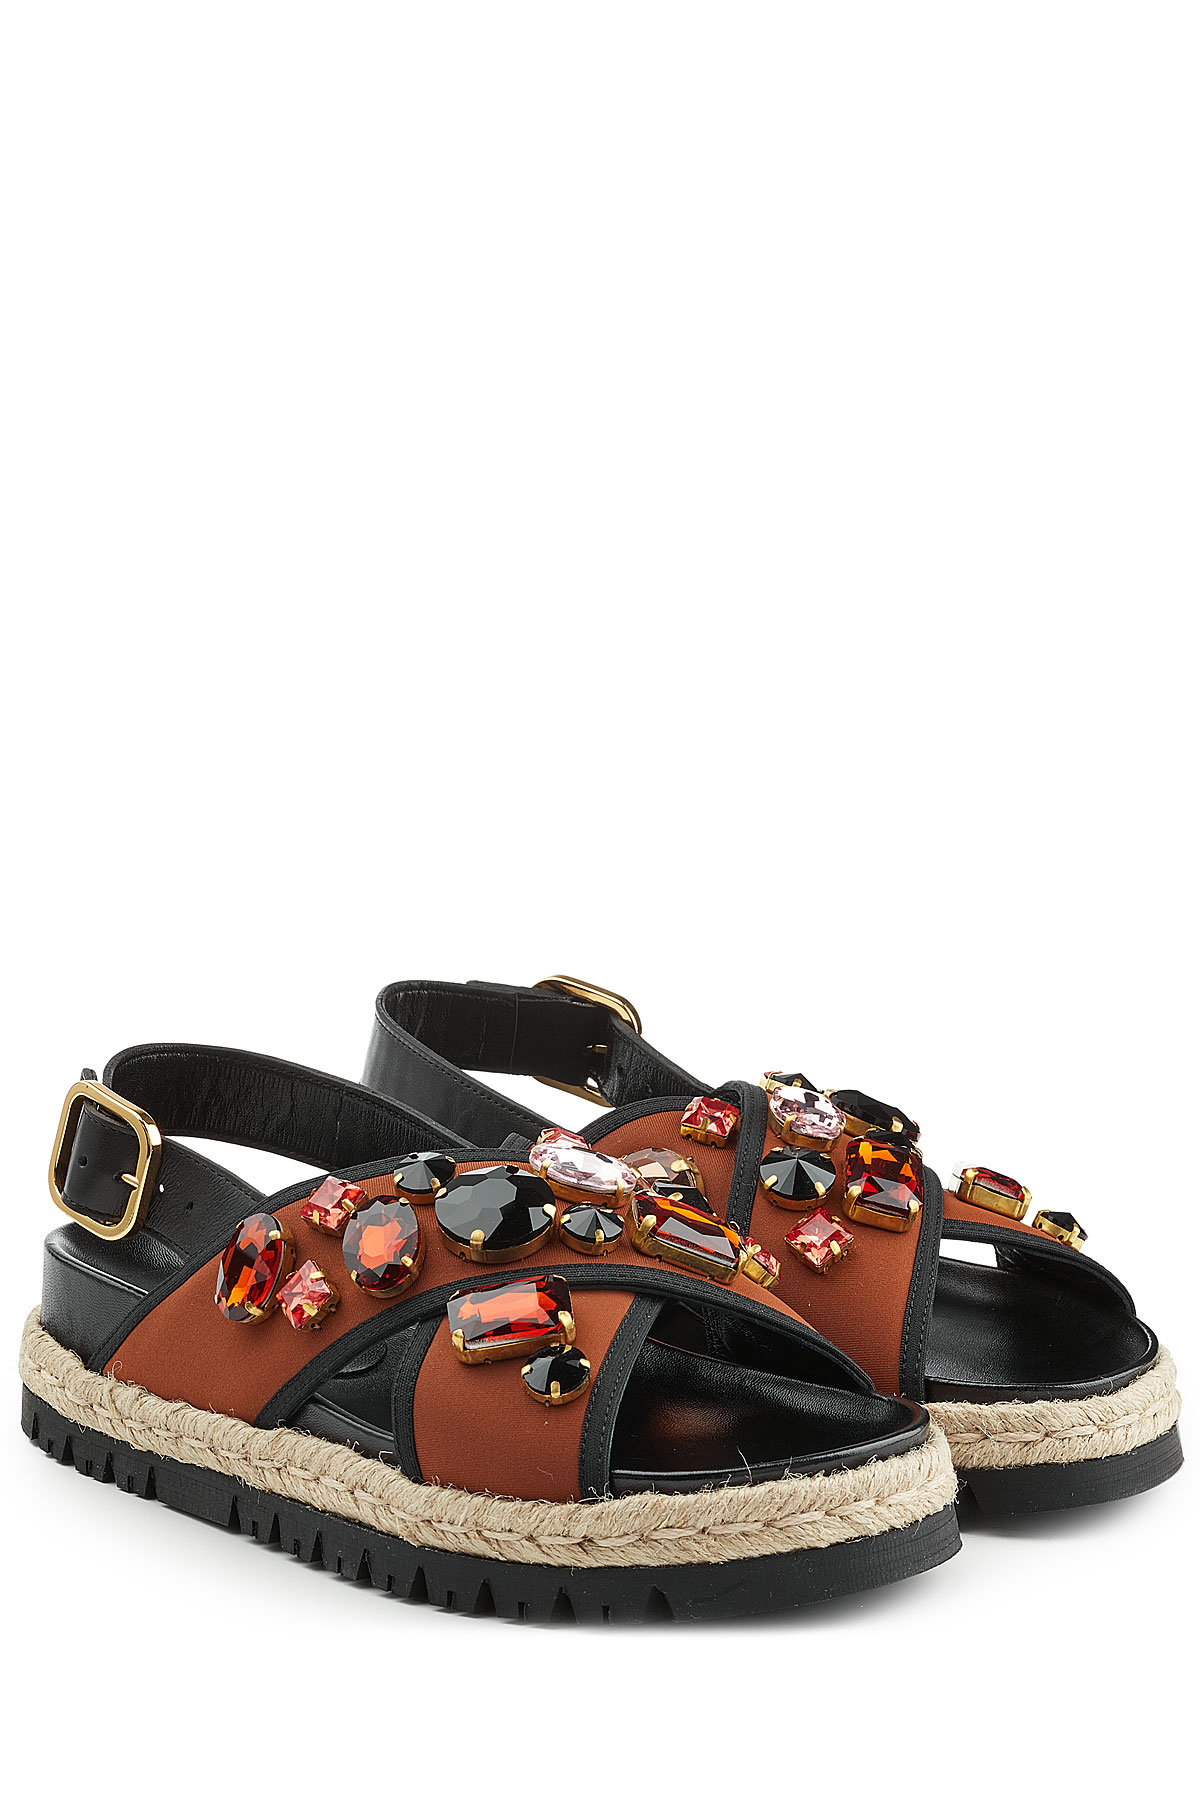 Marni - Embellished Sandals with Raffia